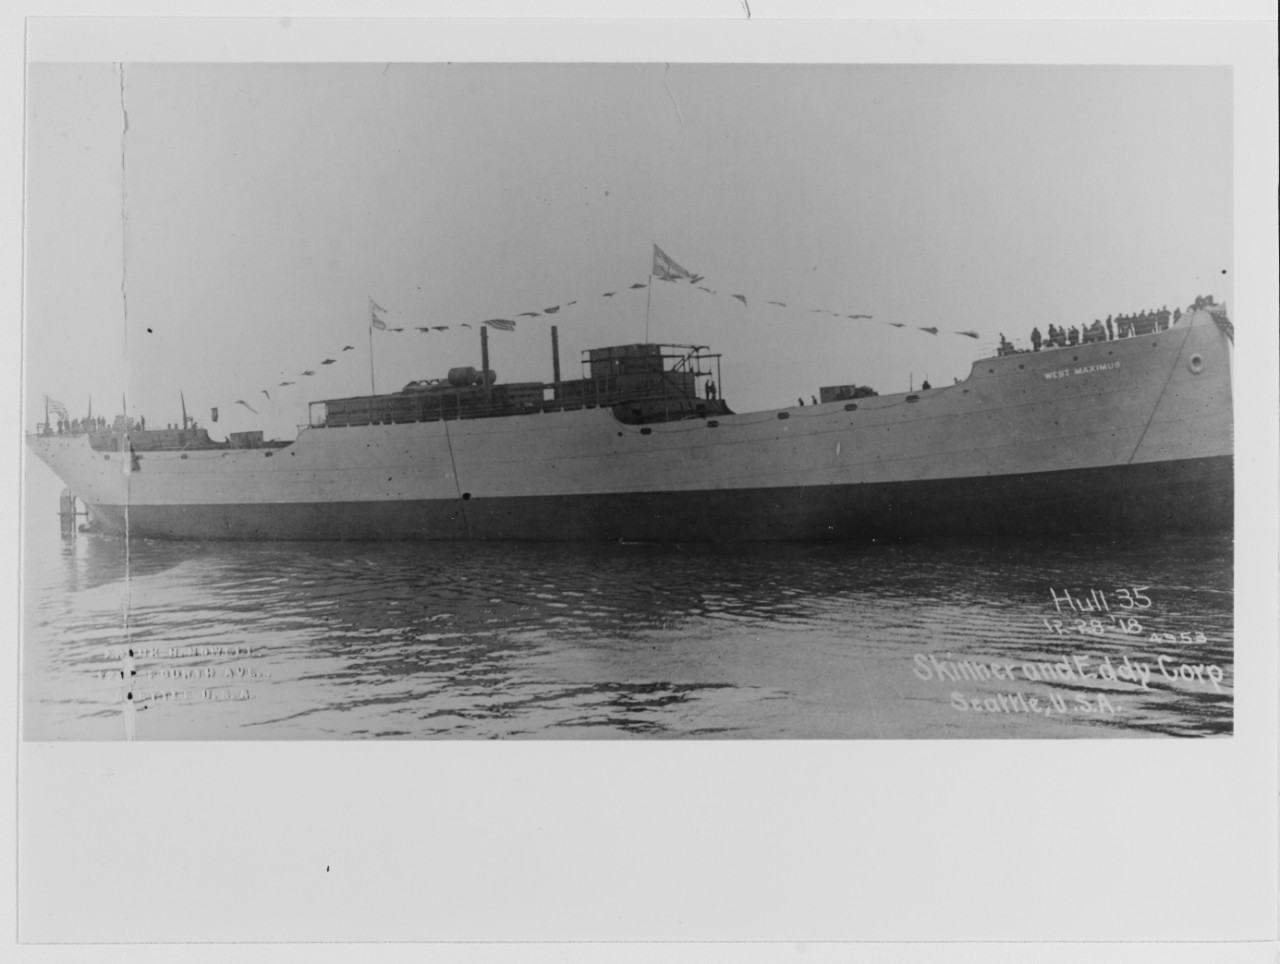 WEST MAXIMUS (U.S. freighter, 1918)